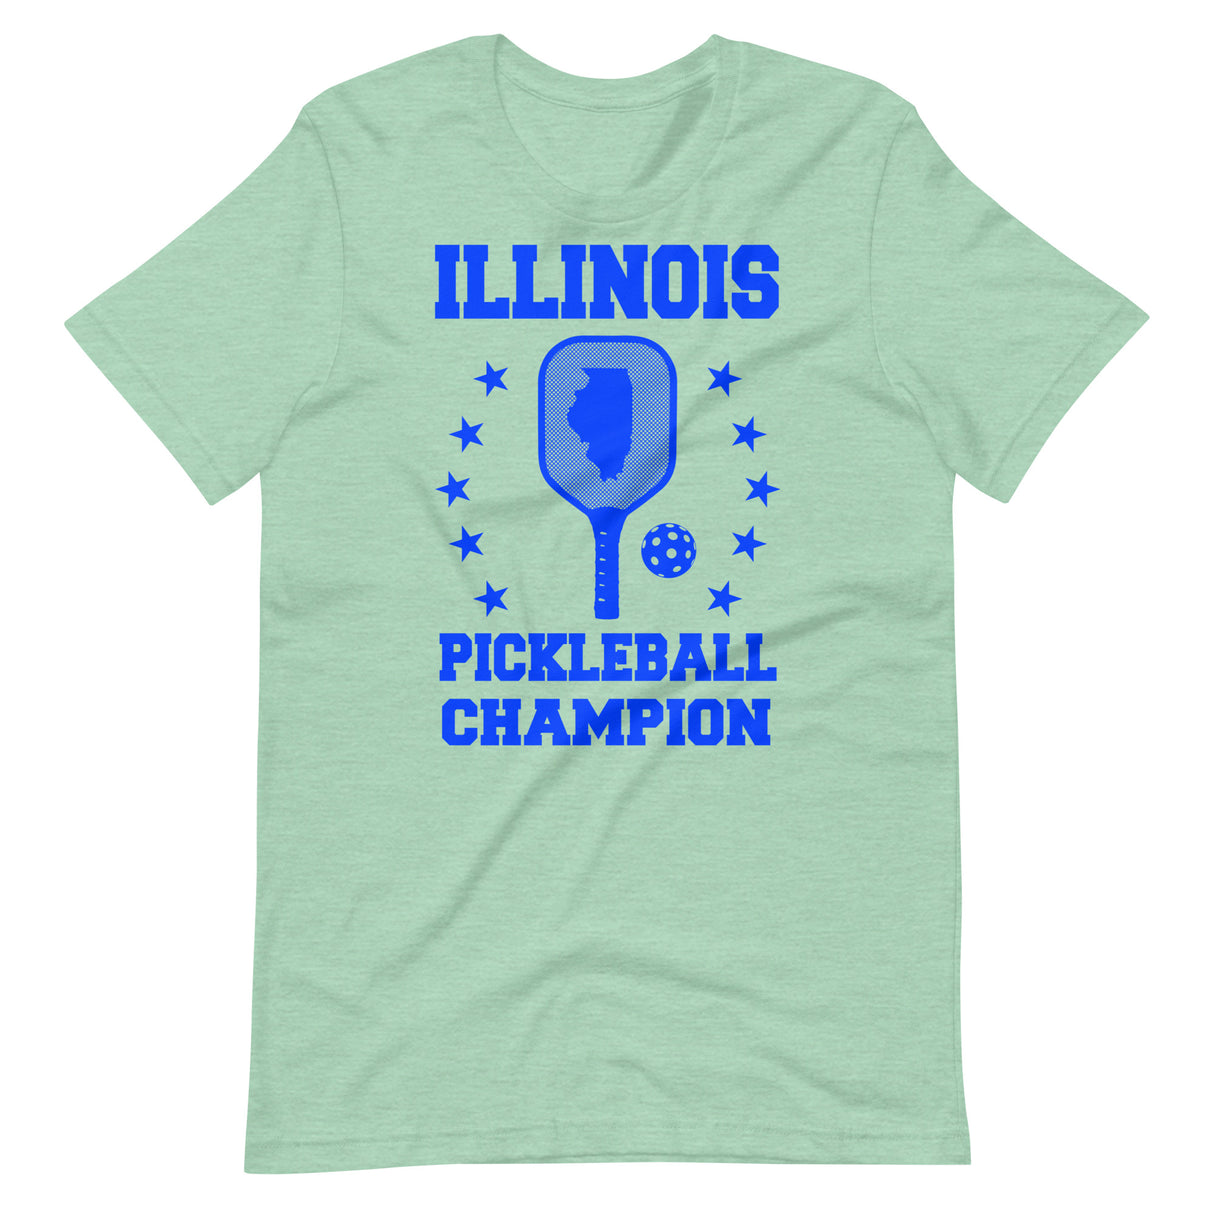 Illinois Pickleball Champion Shirt